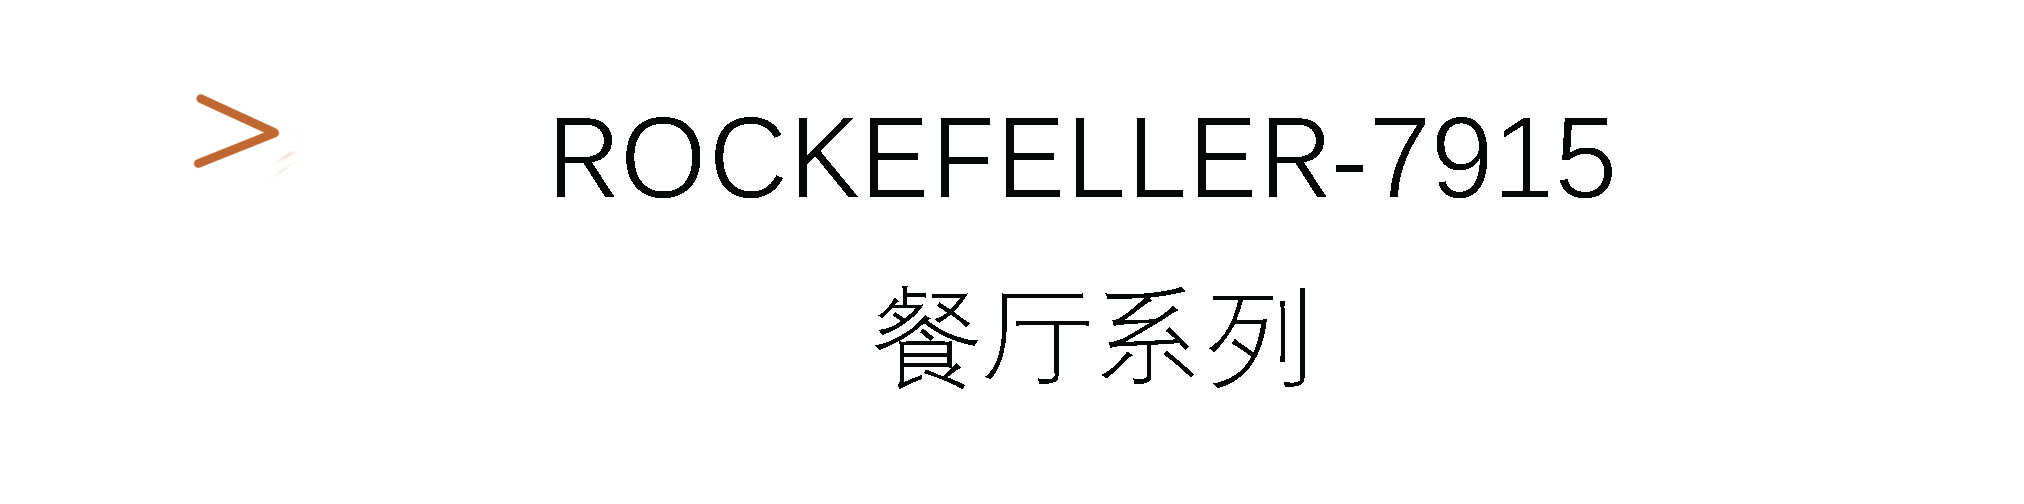 Rockefeller-7915